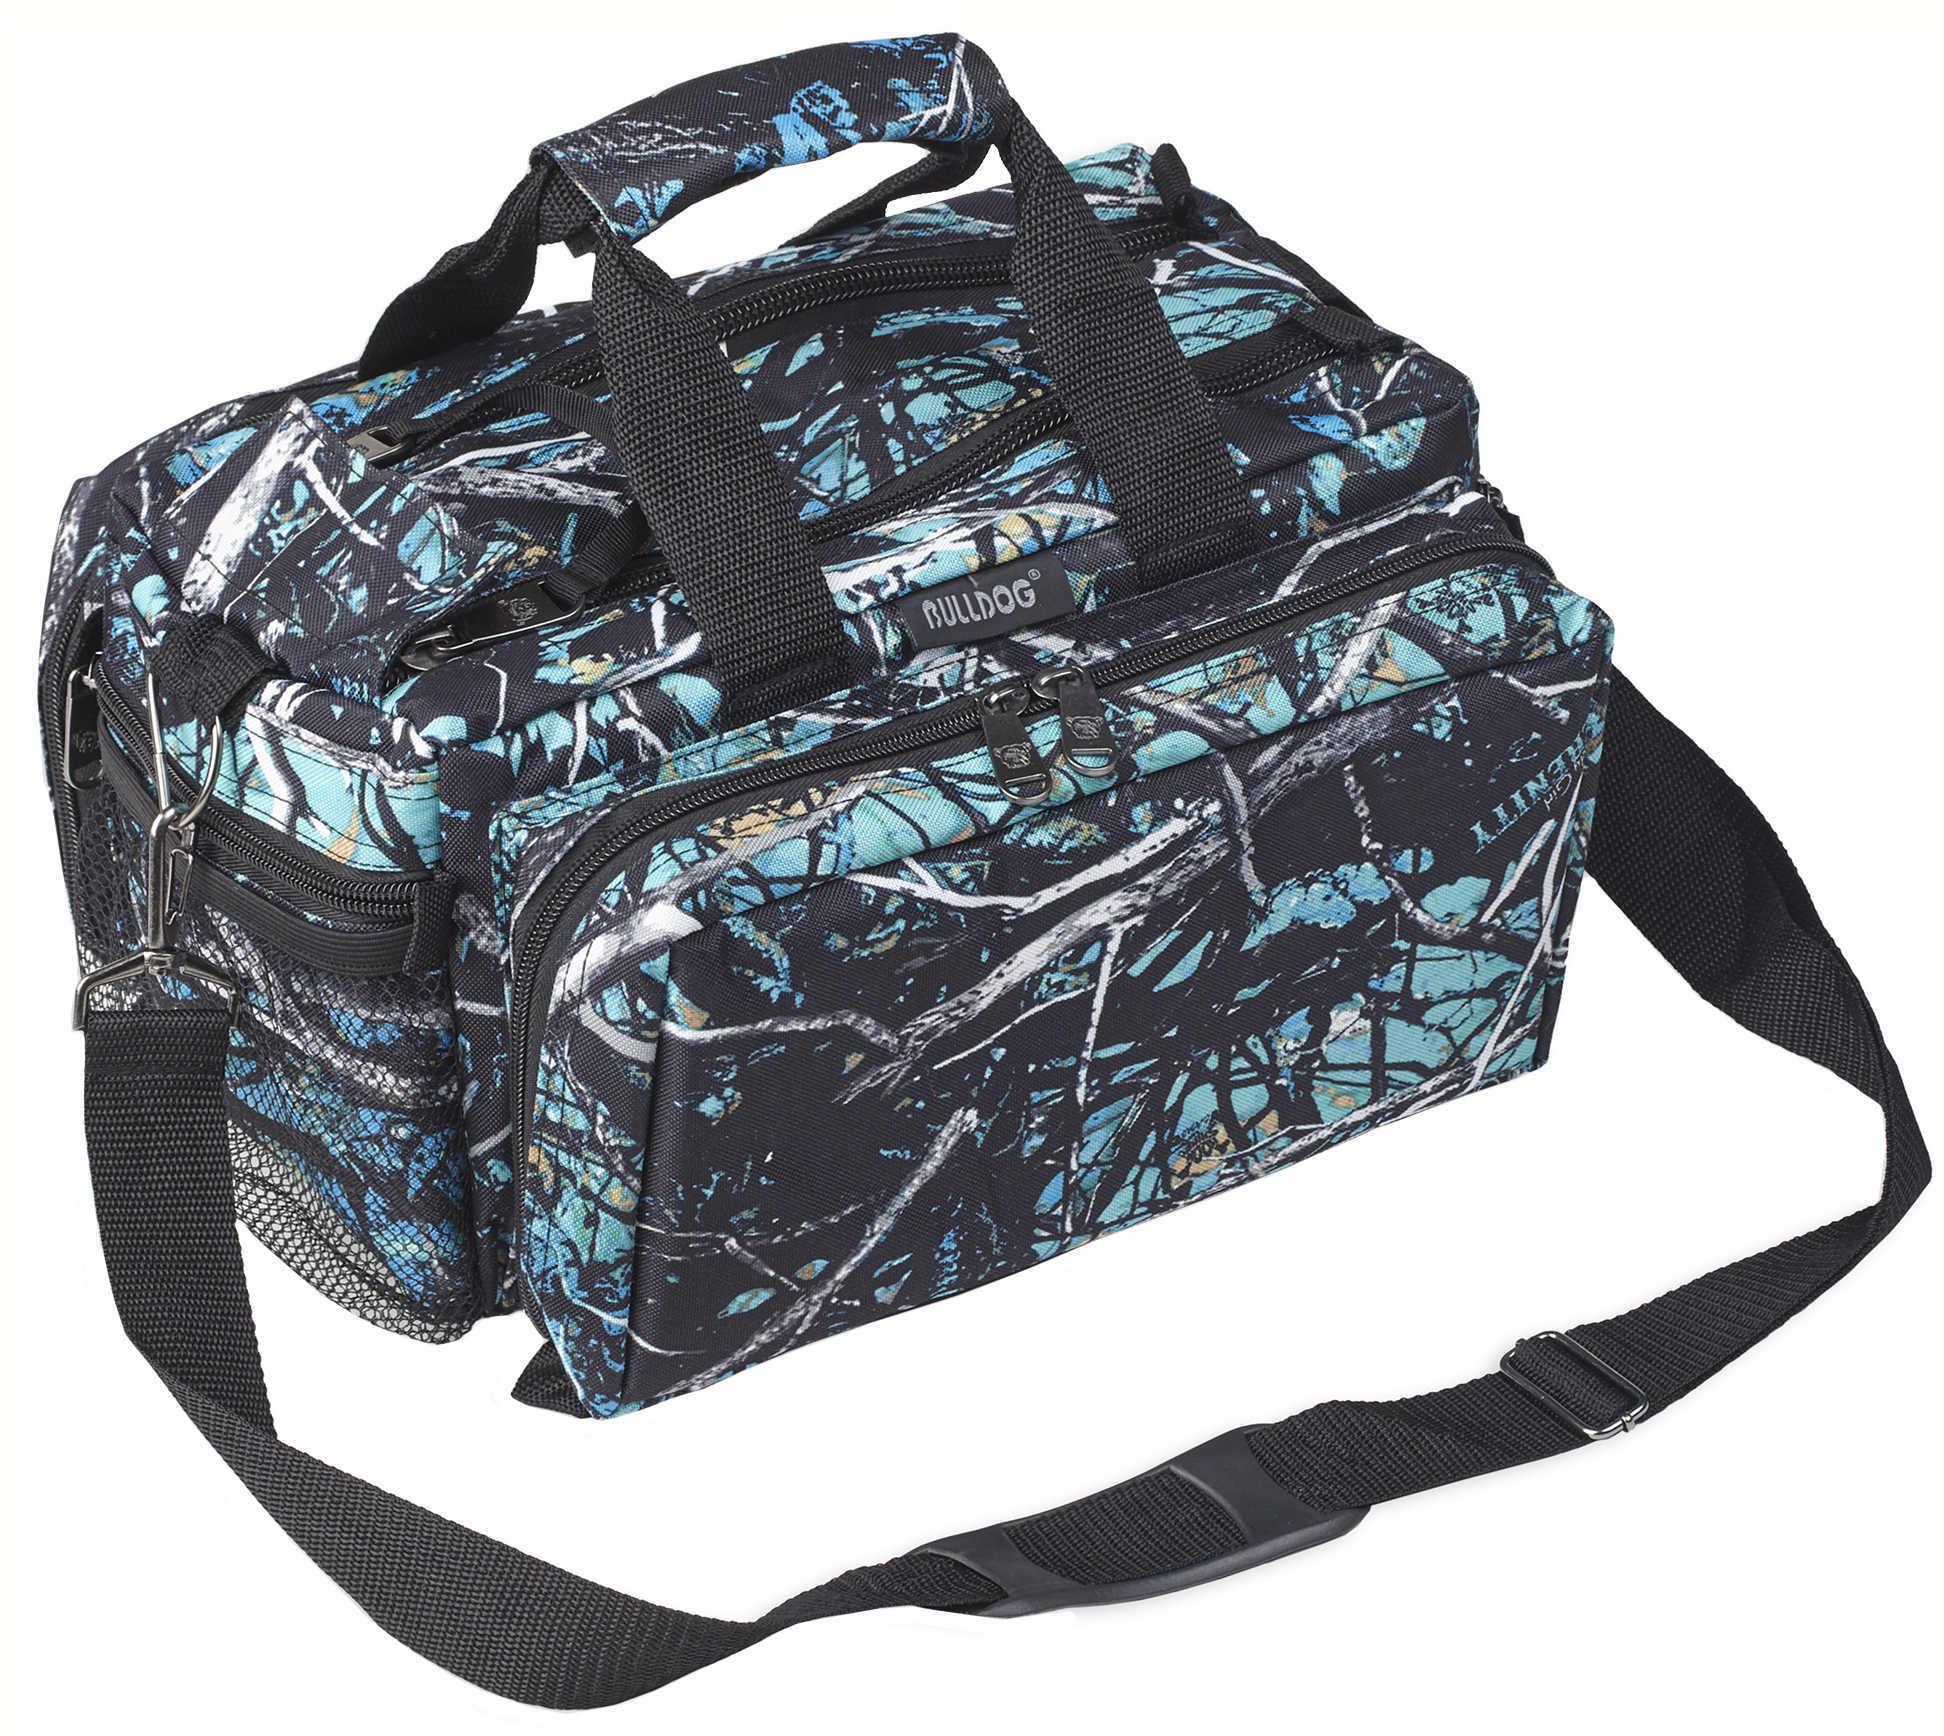 Bulldog Cases Deluxe Range Bag Blk/ Seremity Camo Nylon Medium Includes Shoulder Strap BD910SRN